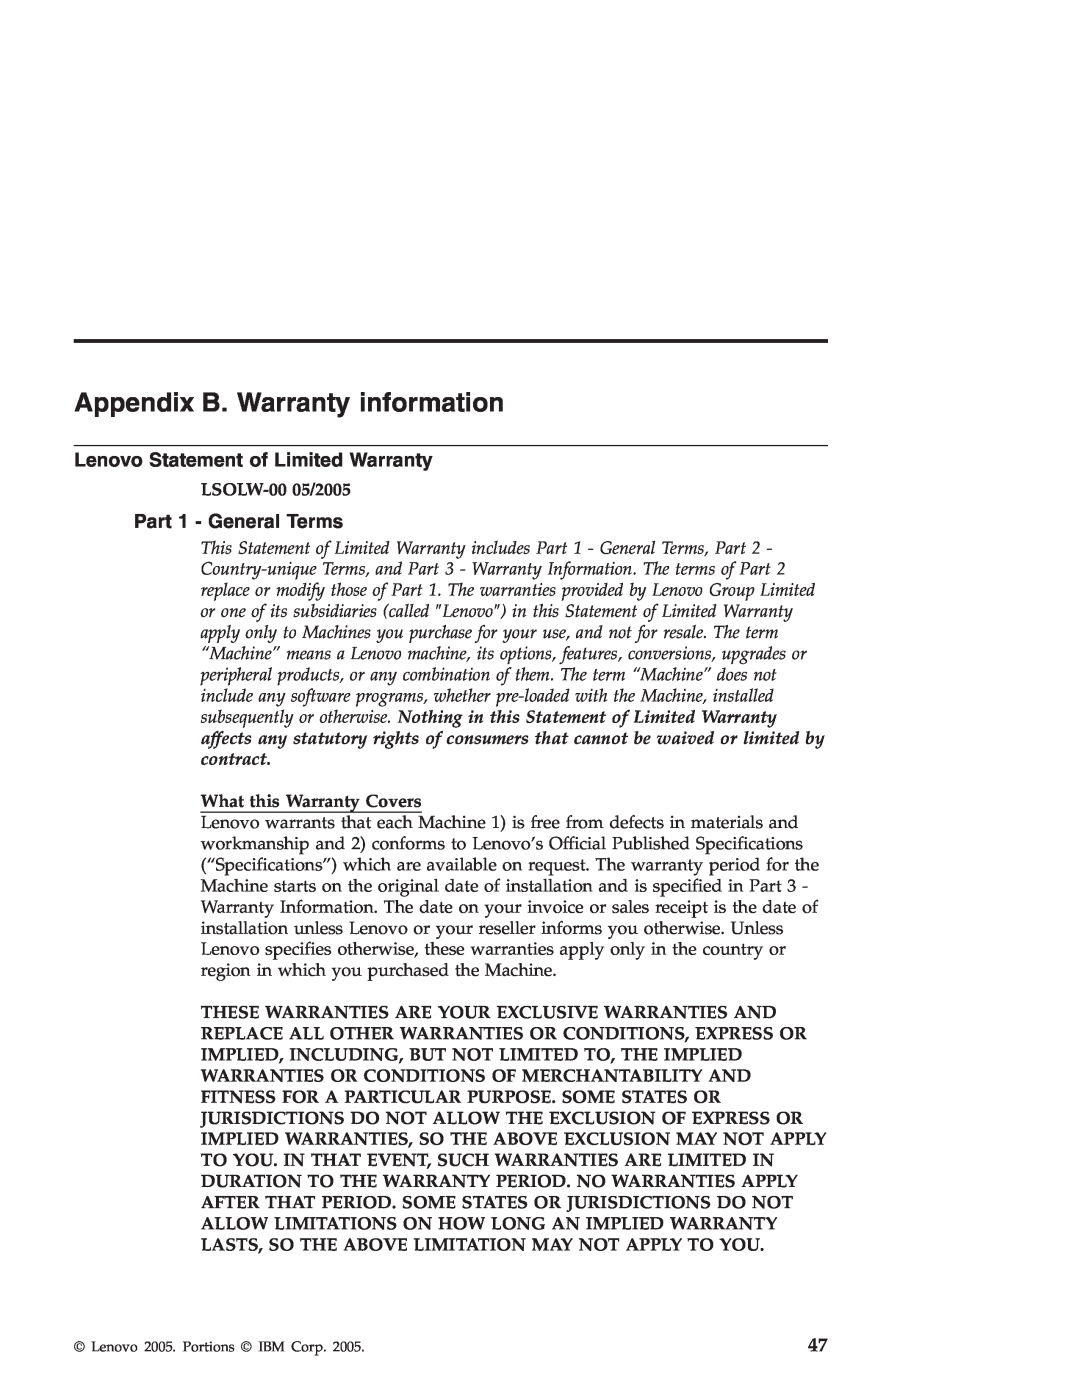 Lenovo R50 Appendix B. Warranty information, Lenovo Statement of Limited Warranty, Part 1 - General Terms, LSOLW-0005/2005 